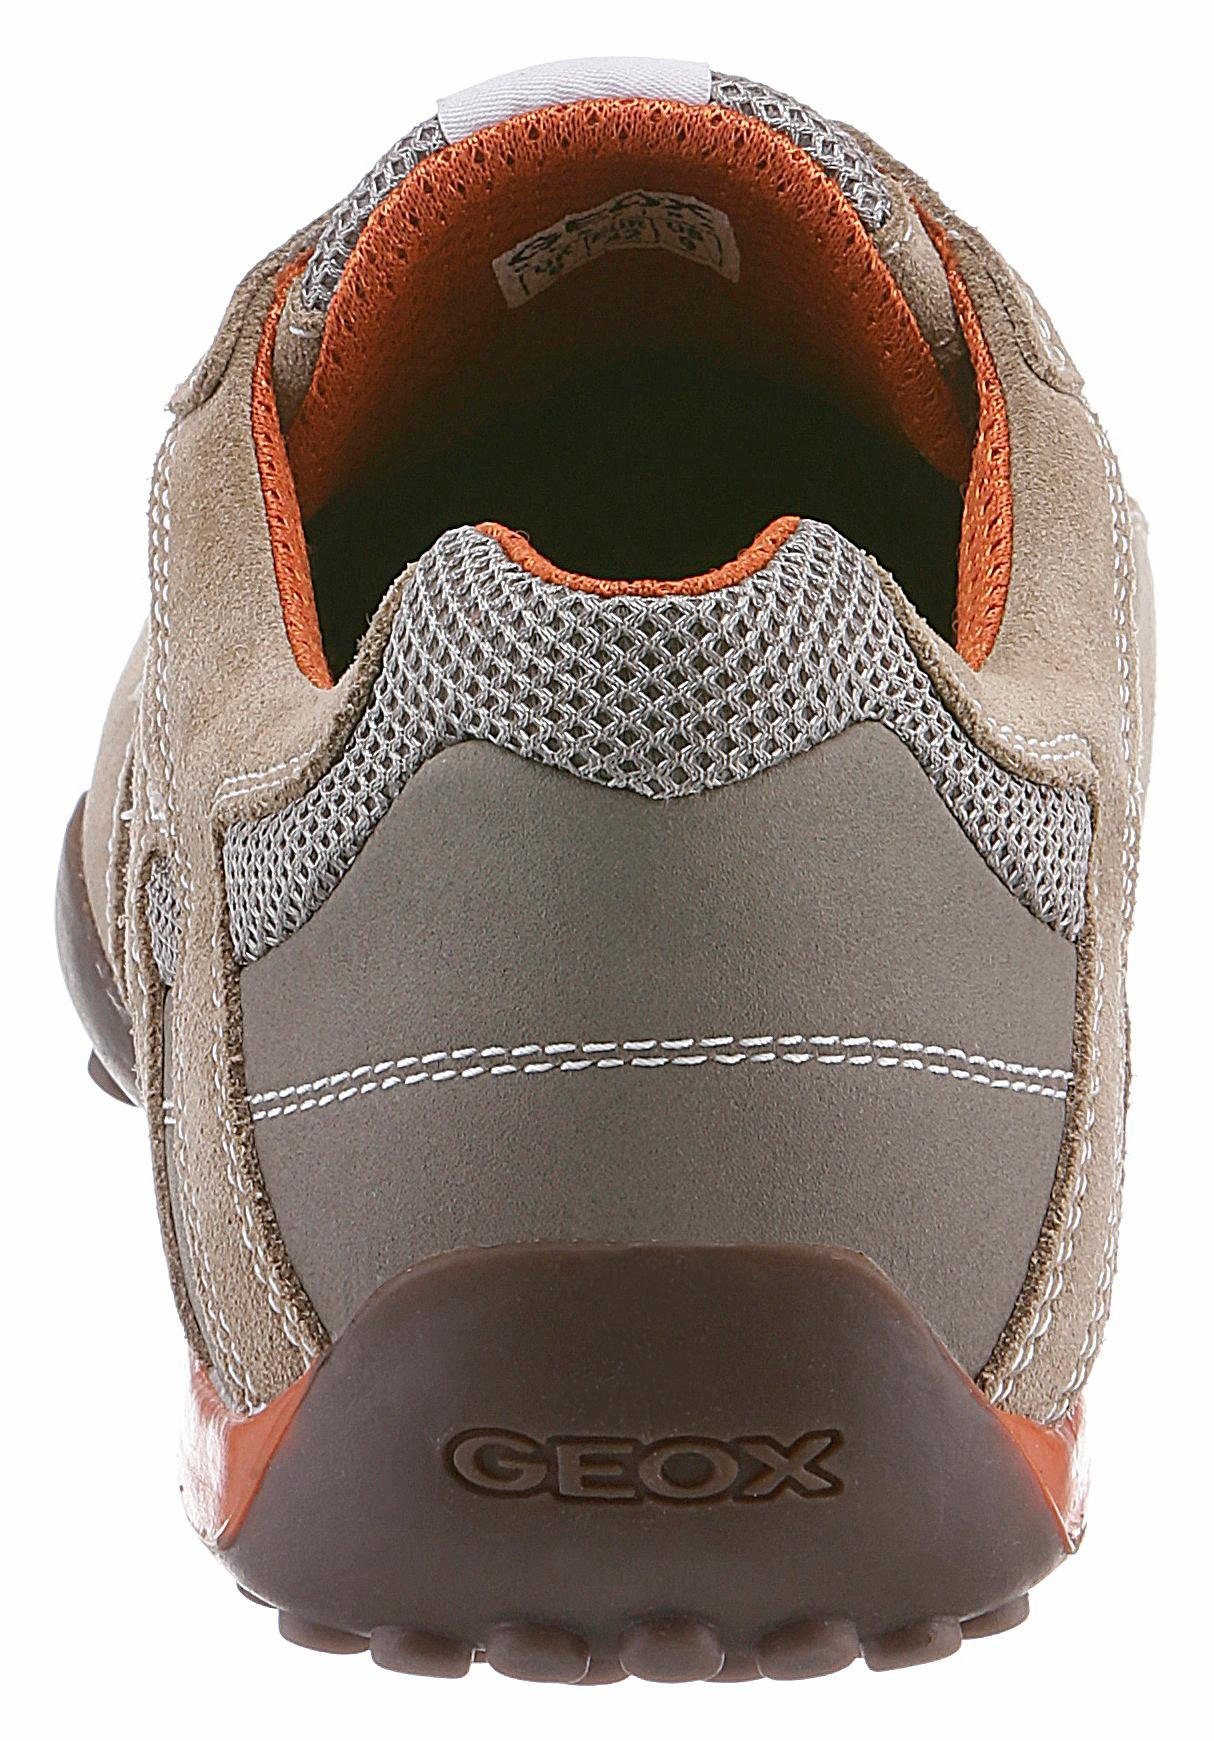 Geox Snake Membrane Sneaker Spezial beige mit Materialmix Geox im